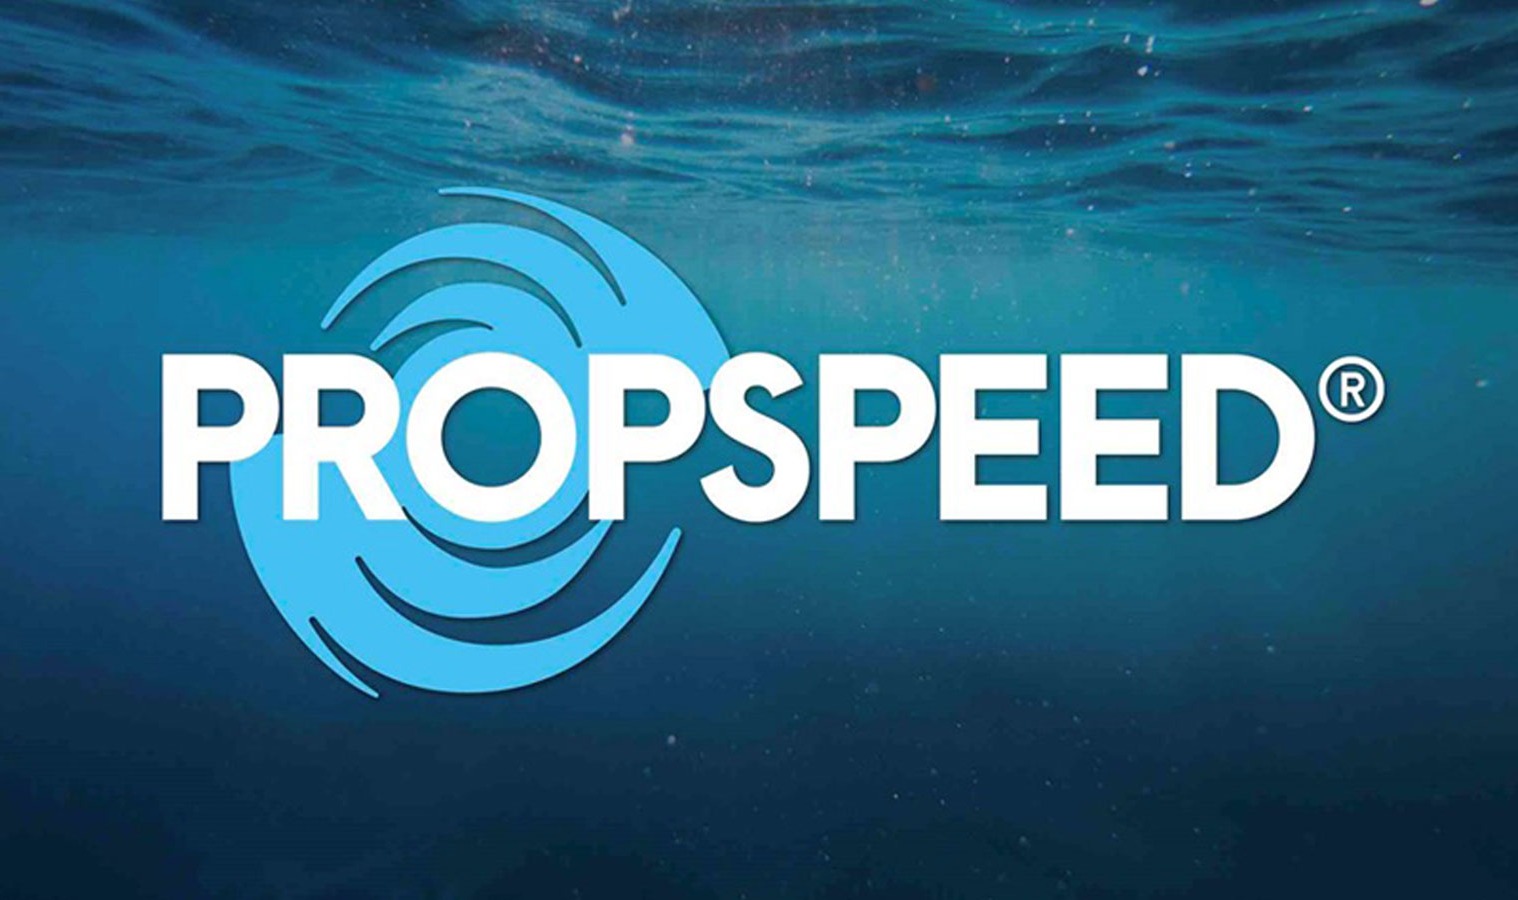 Propspeed's new brand identity